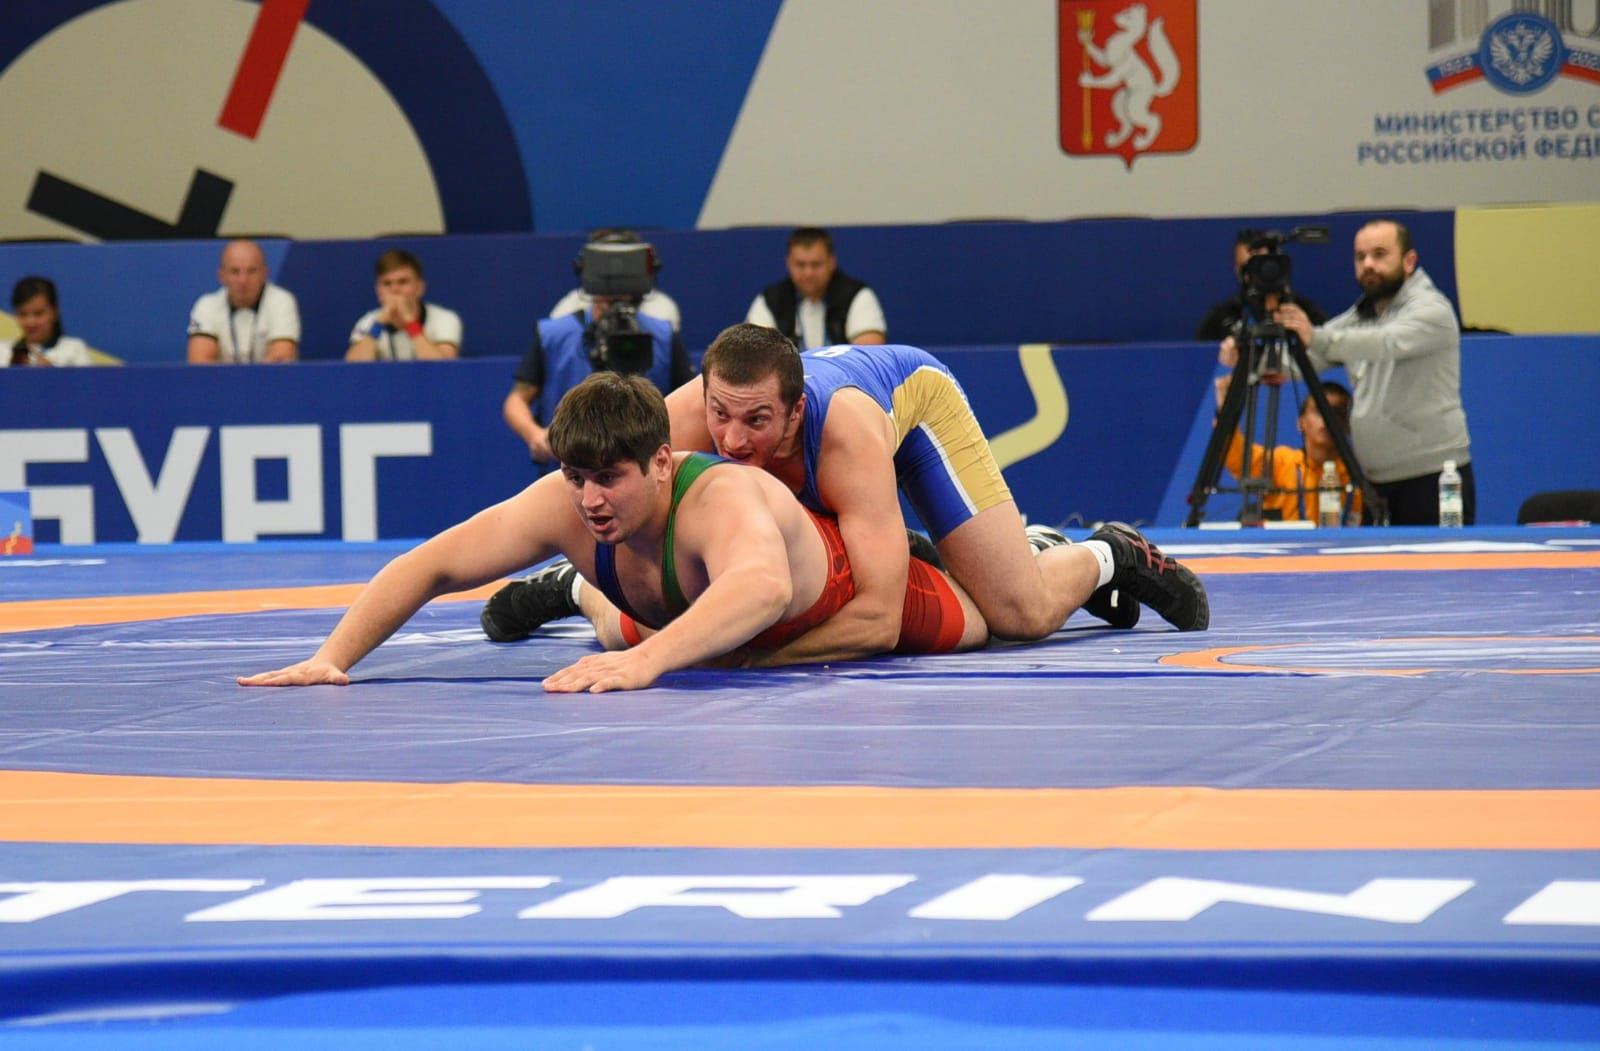 Азербайджанский борец завоевал "серебро" на международном университетском фестивале (ФОТО)